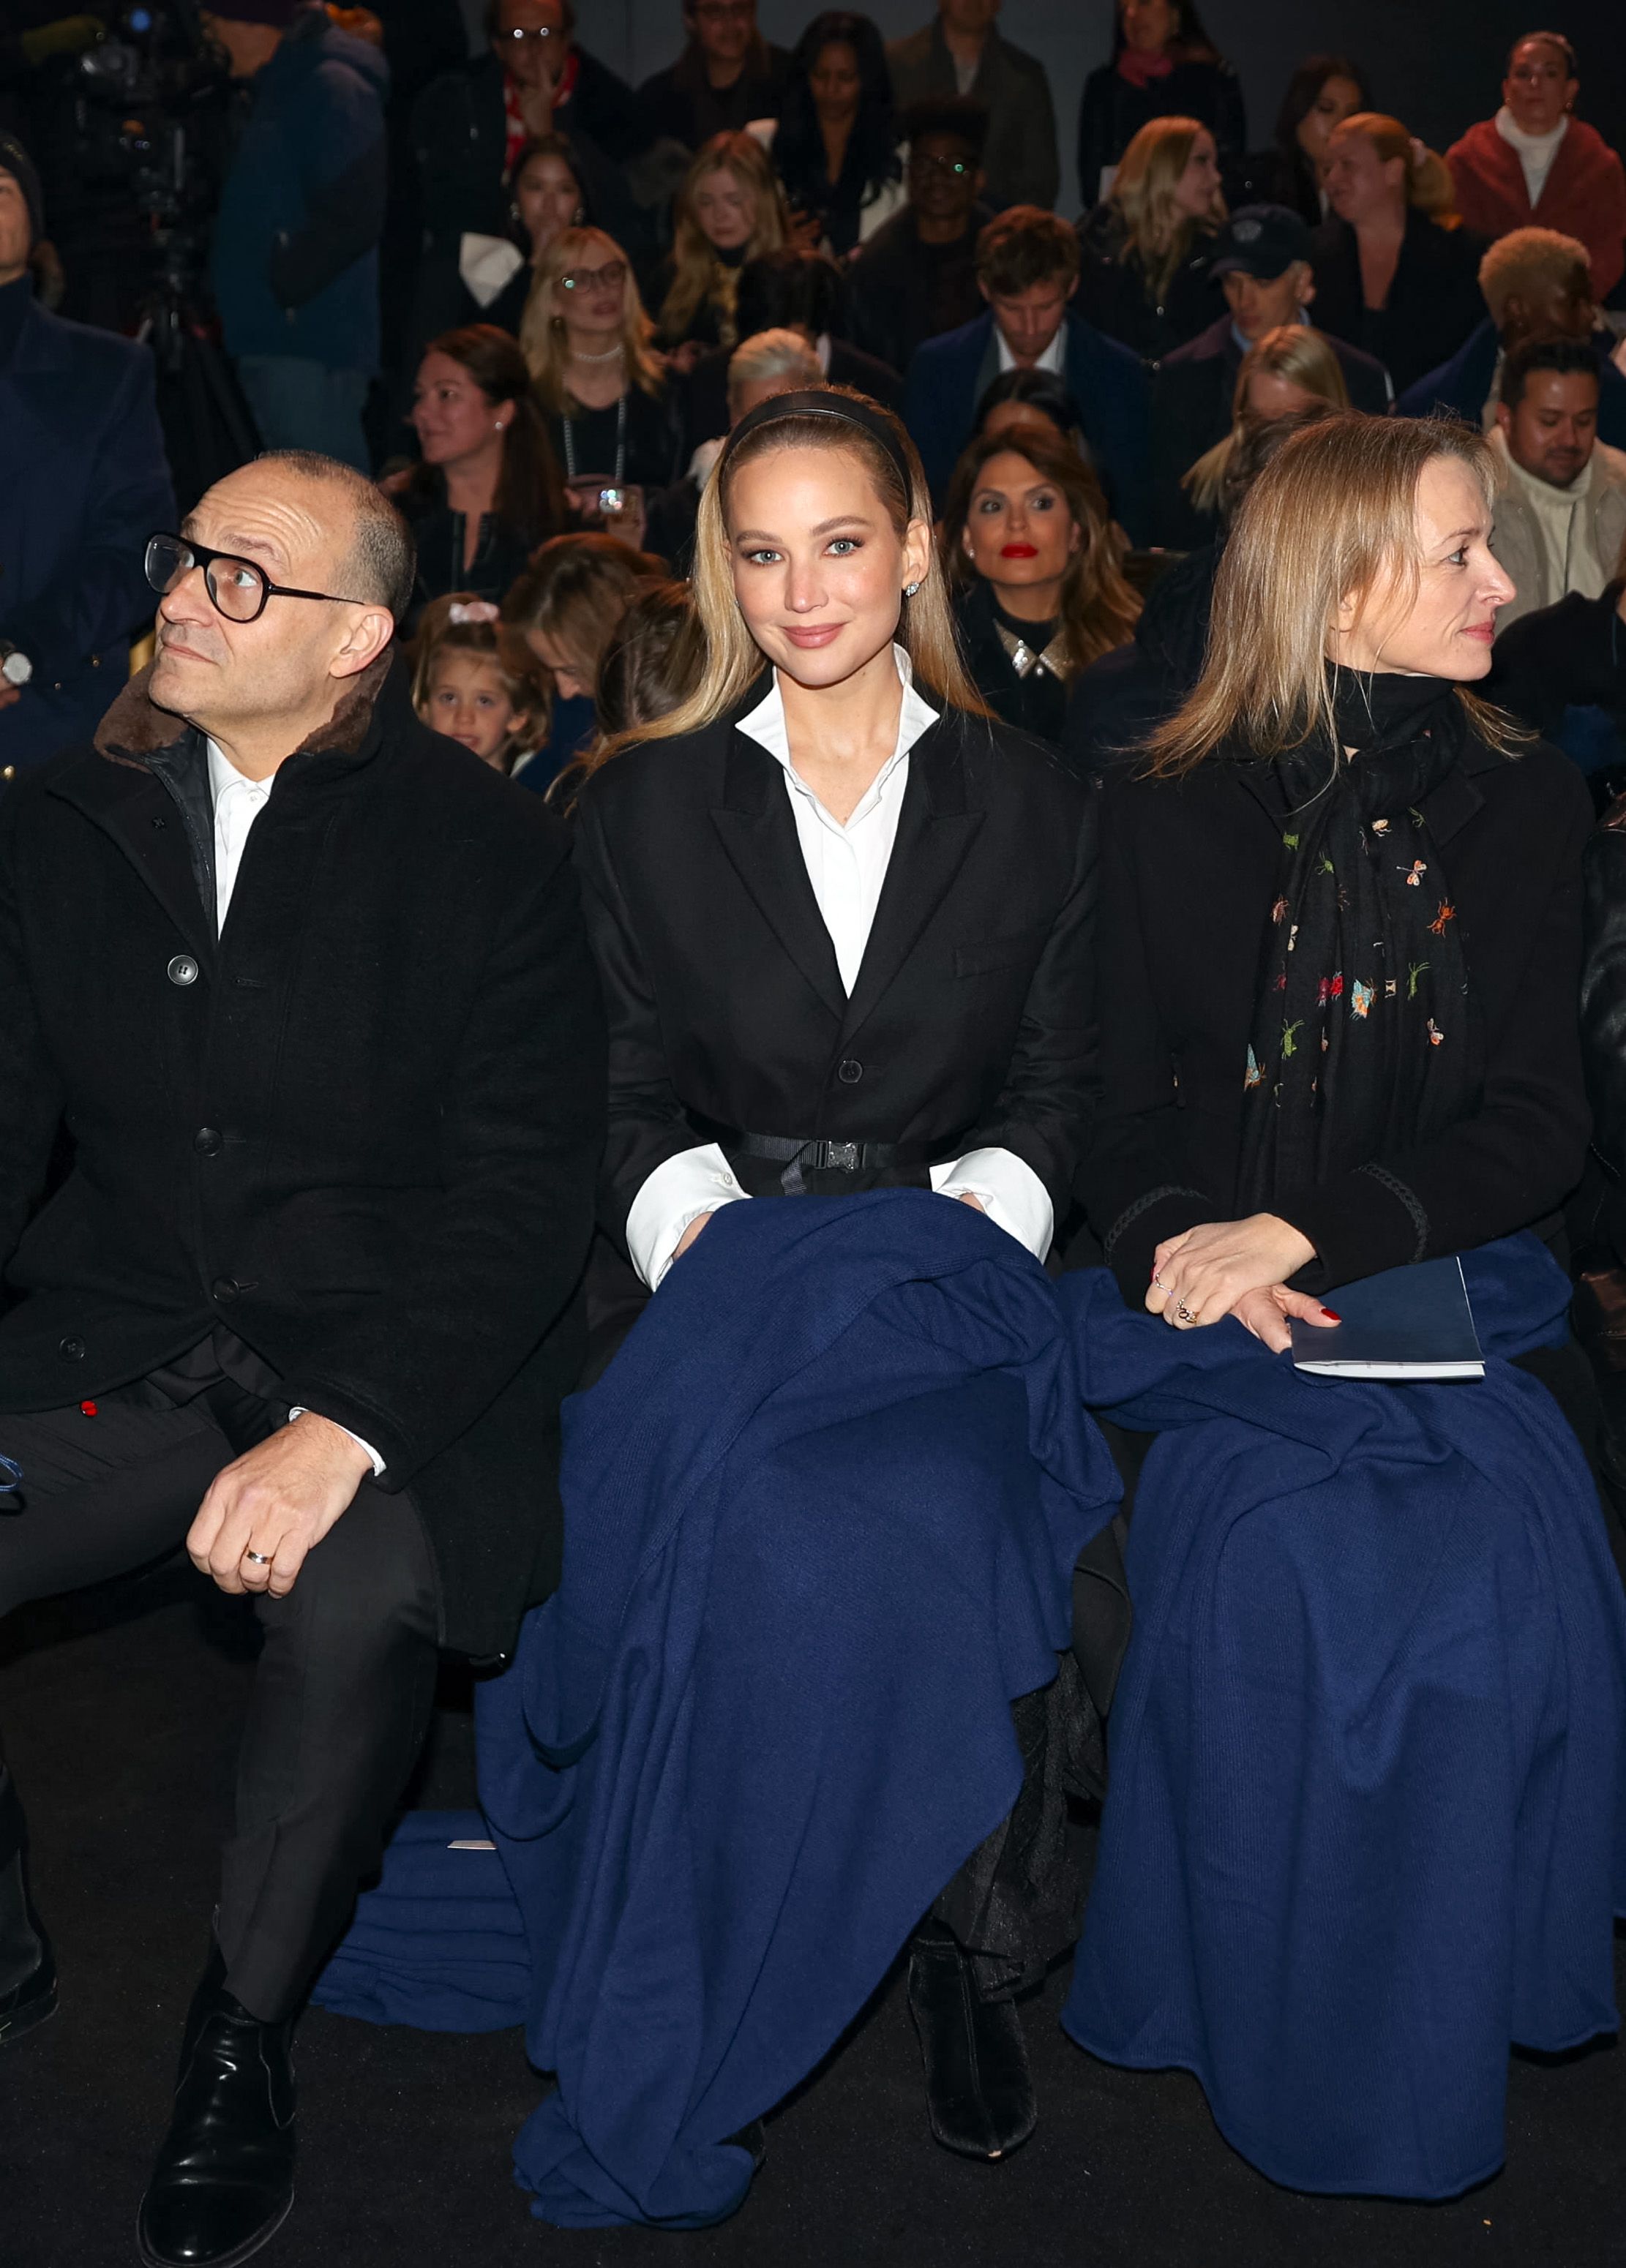 Jennifer Lawrence had a hilarious wardrobe malfunction in NYC